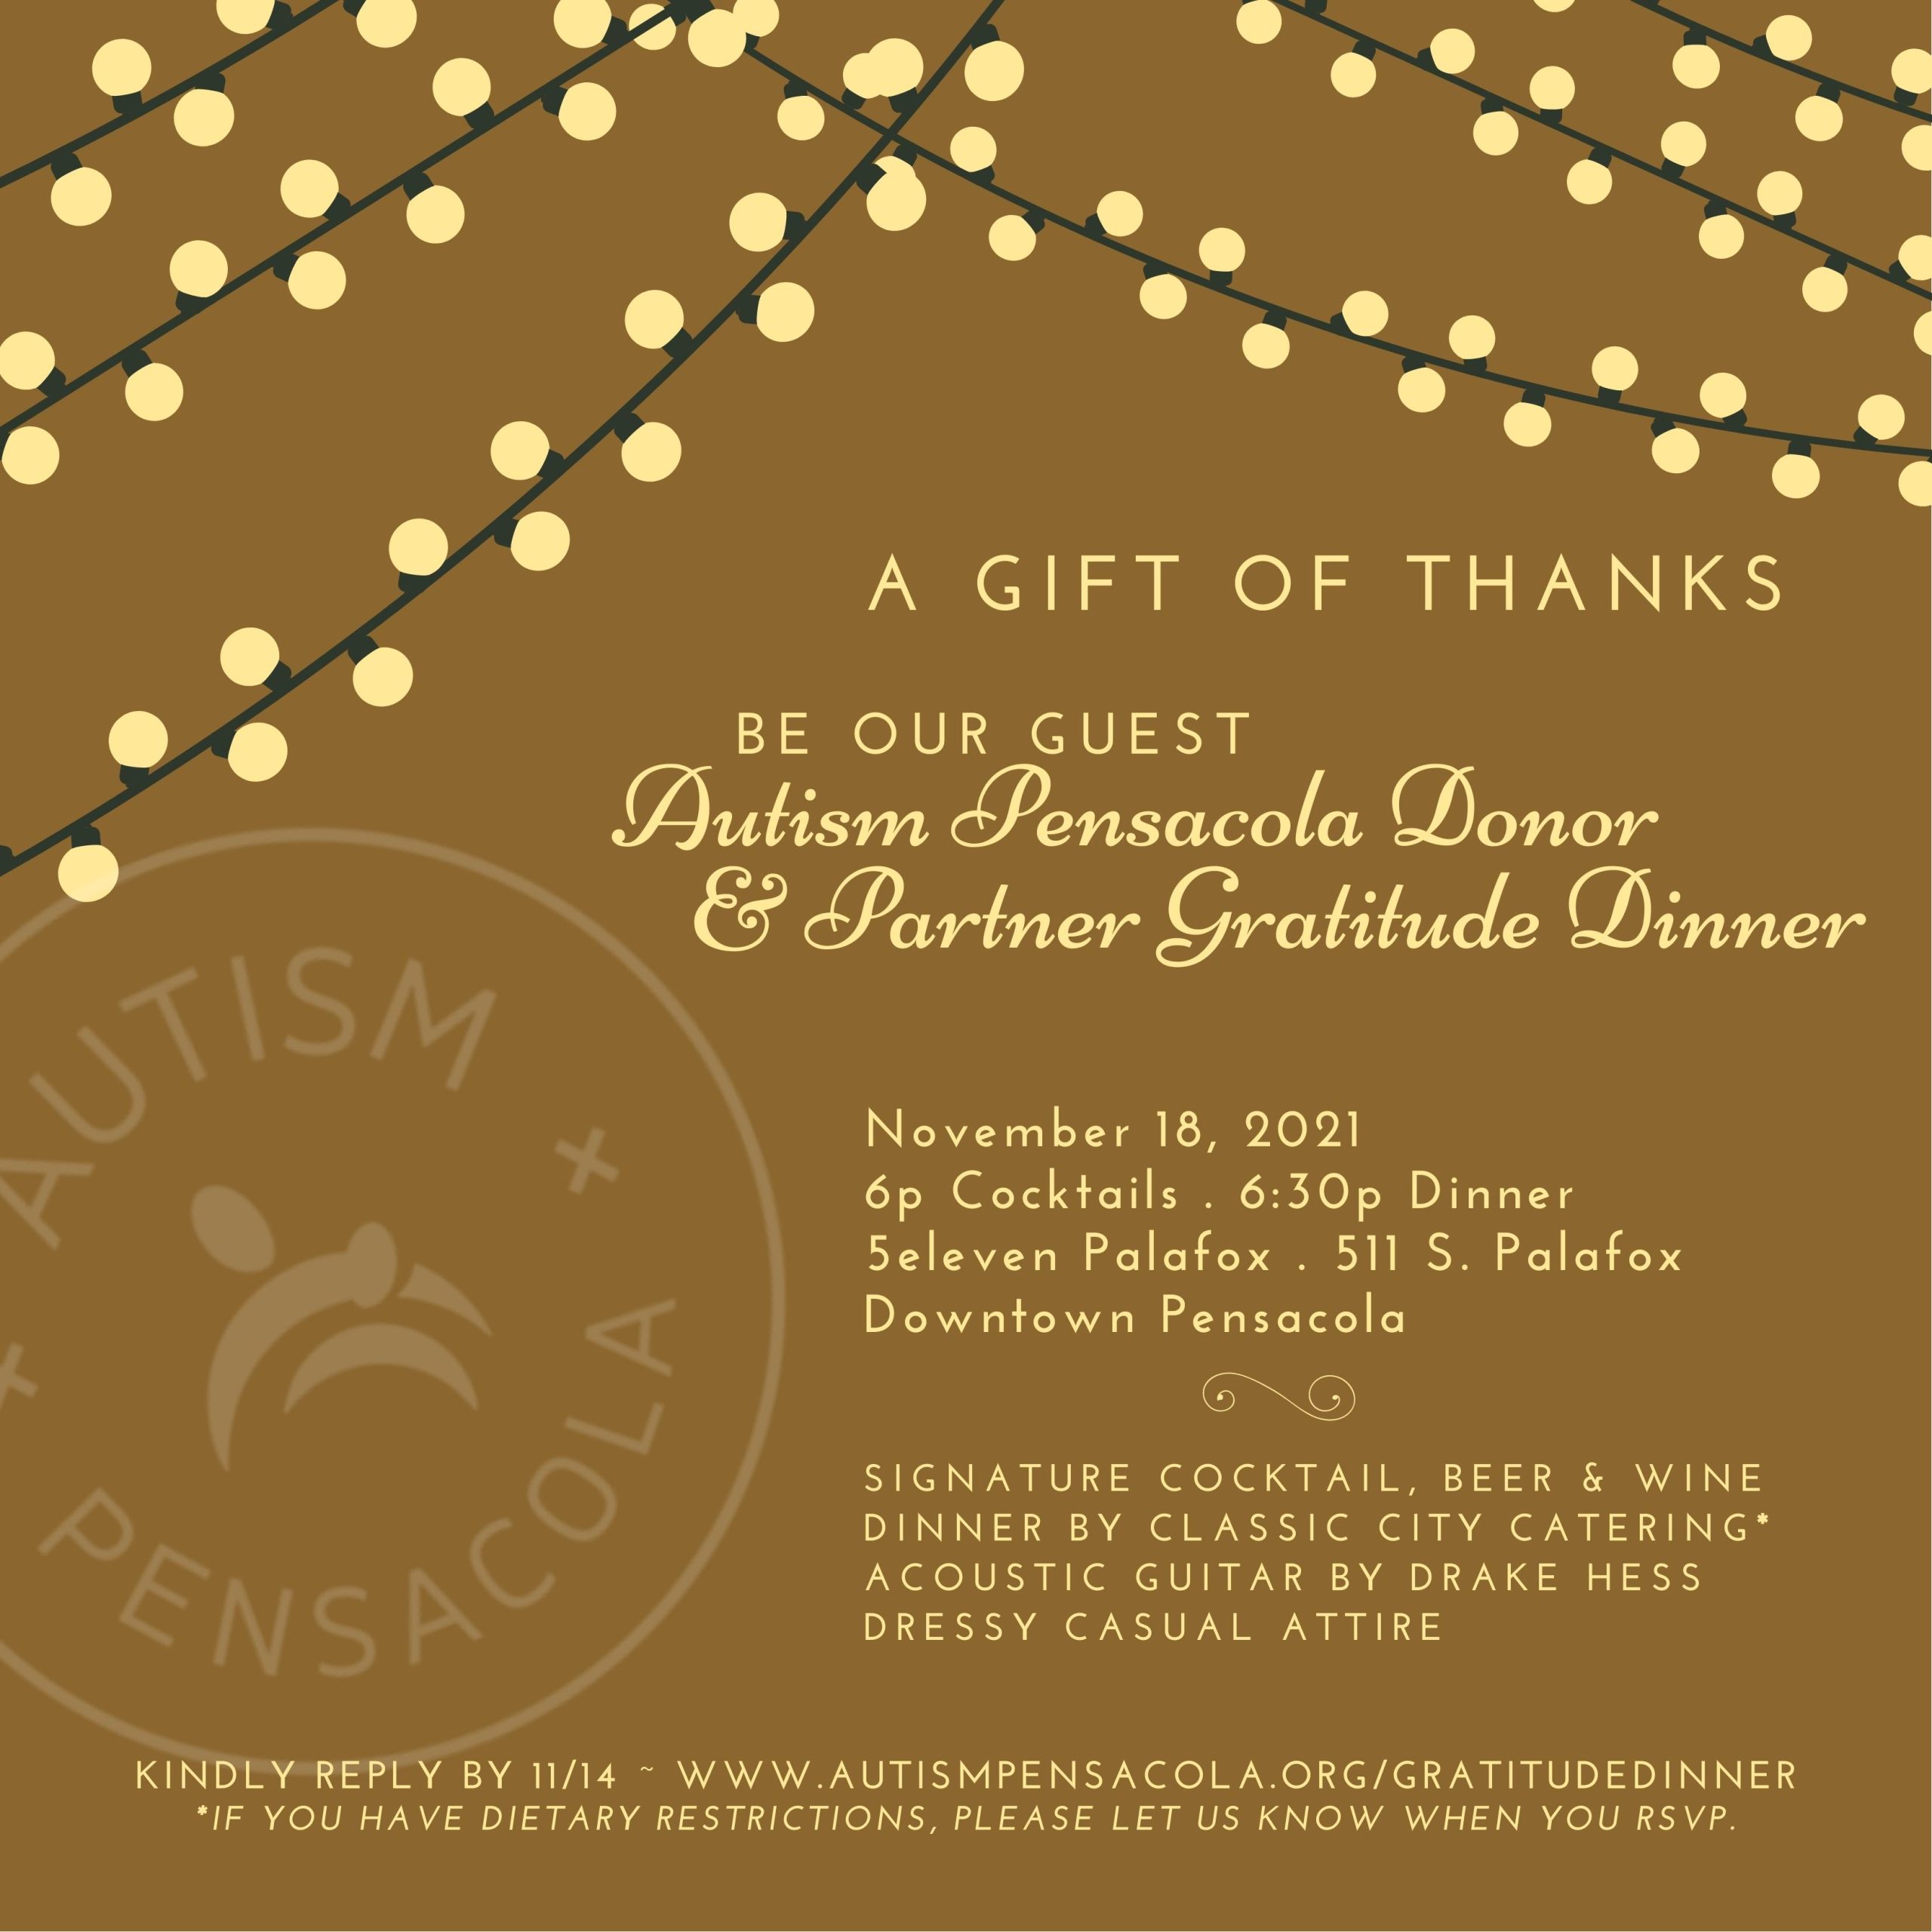 Autism Pensacola Donor & Partner Gratitude Dinner Invitation